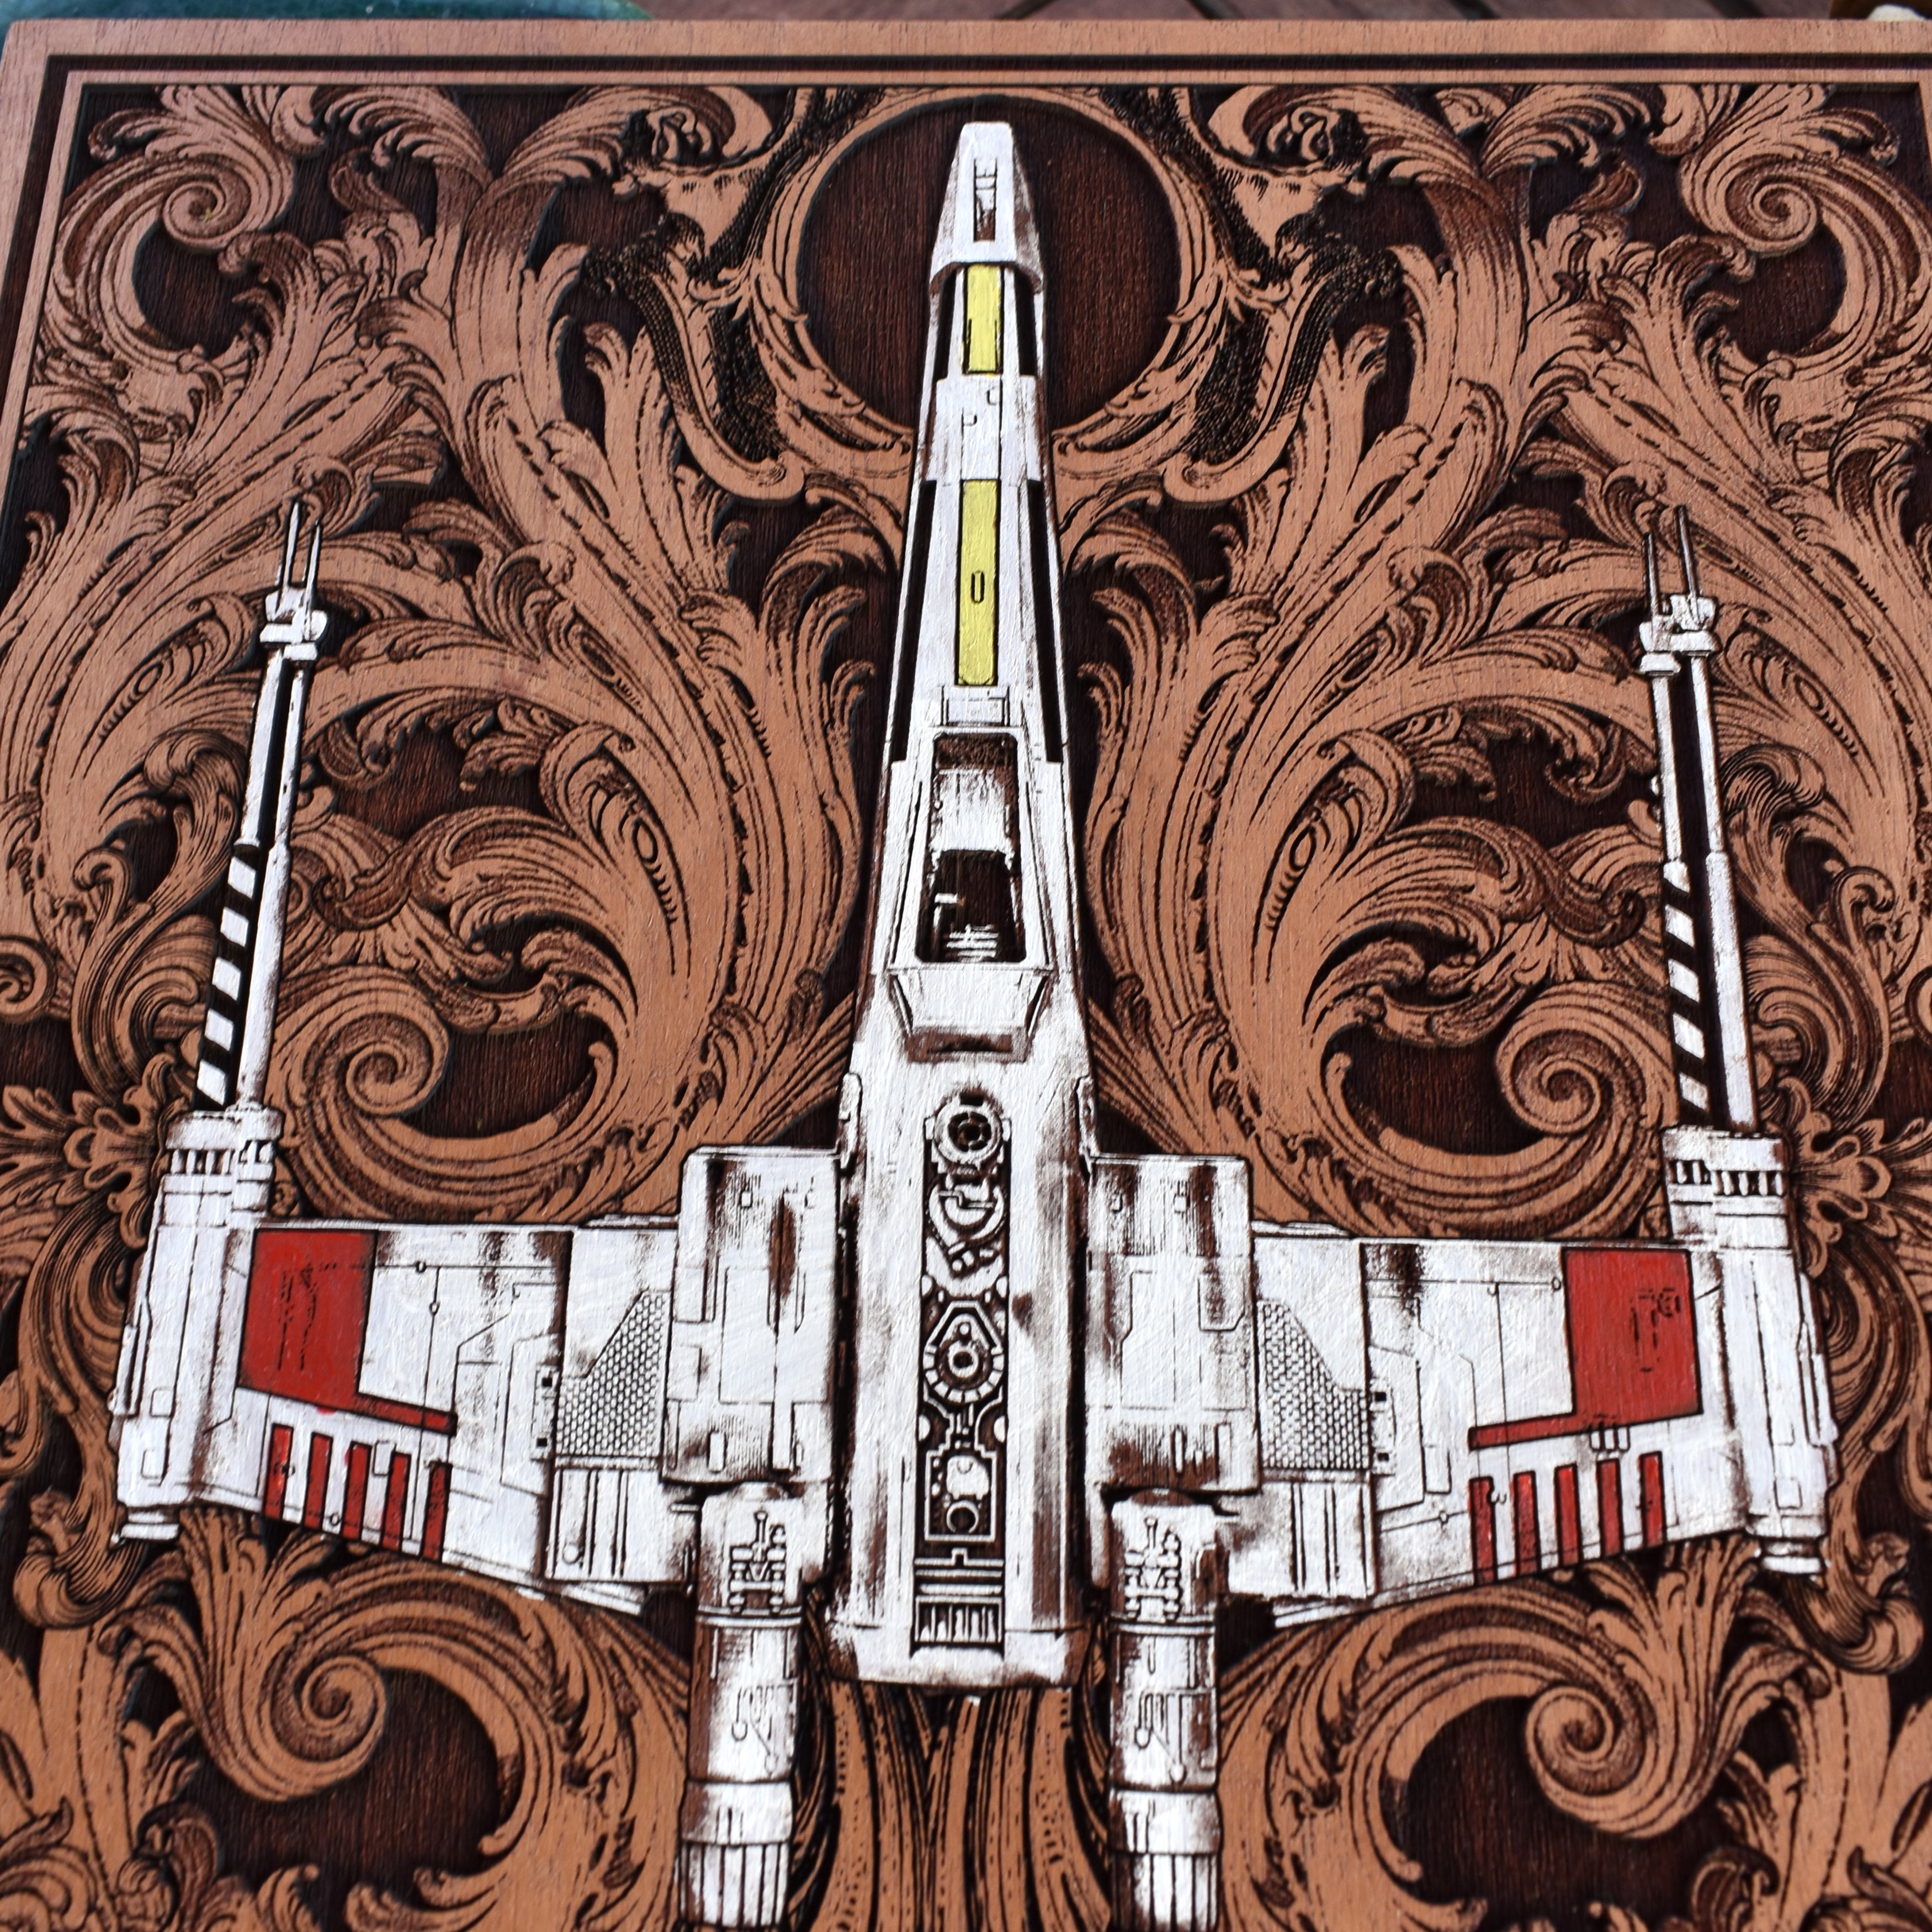 Intergalactic Ship VIII - Large Cedar Wood - Hand Painted